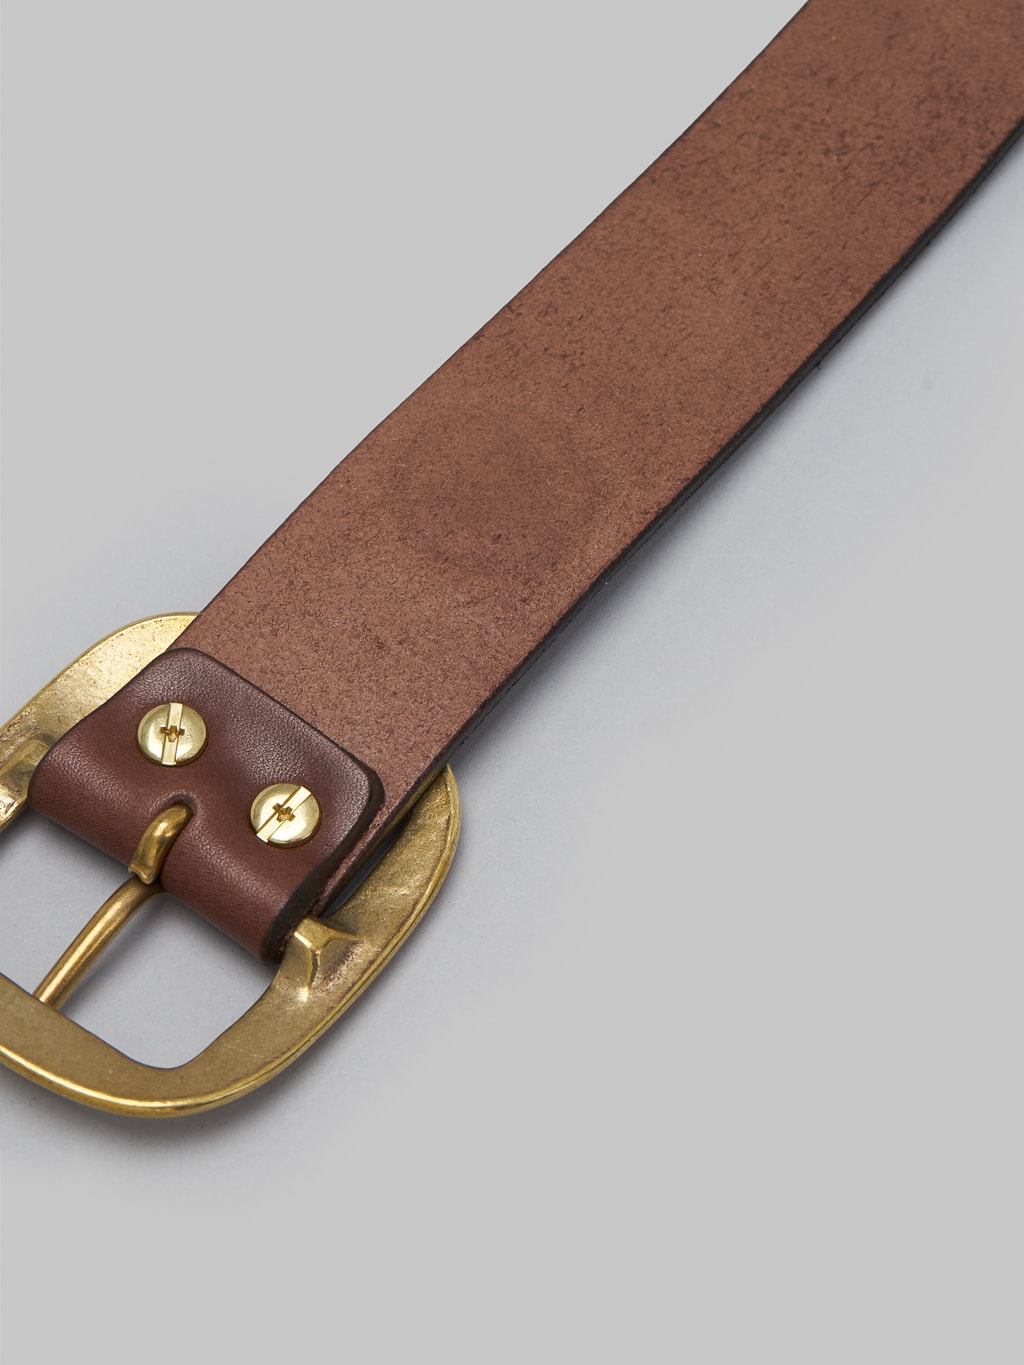 Momotaro AS 58 brown Bens Leather Belt brass buckle